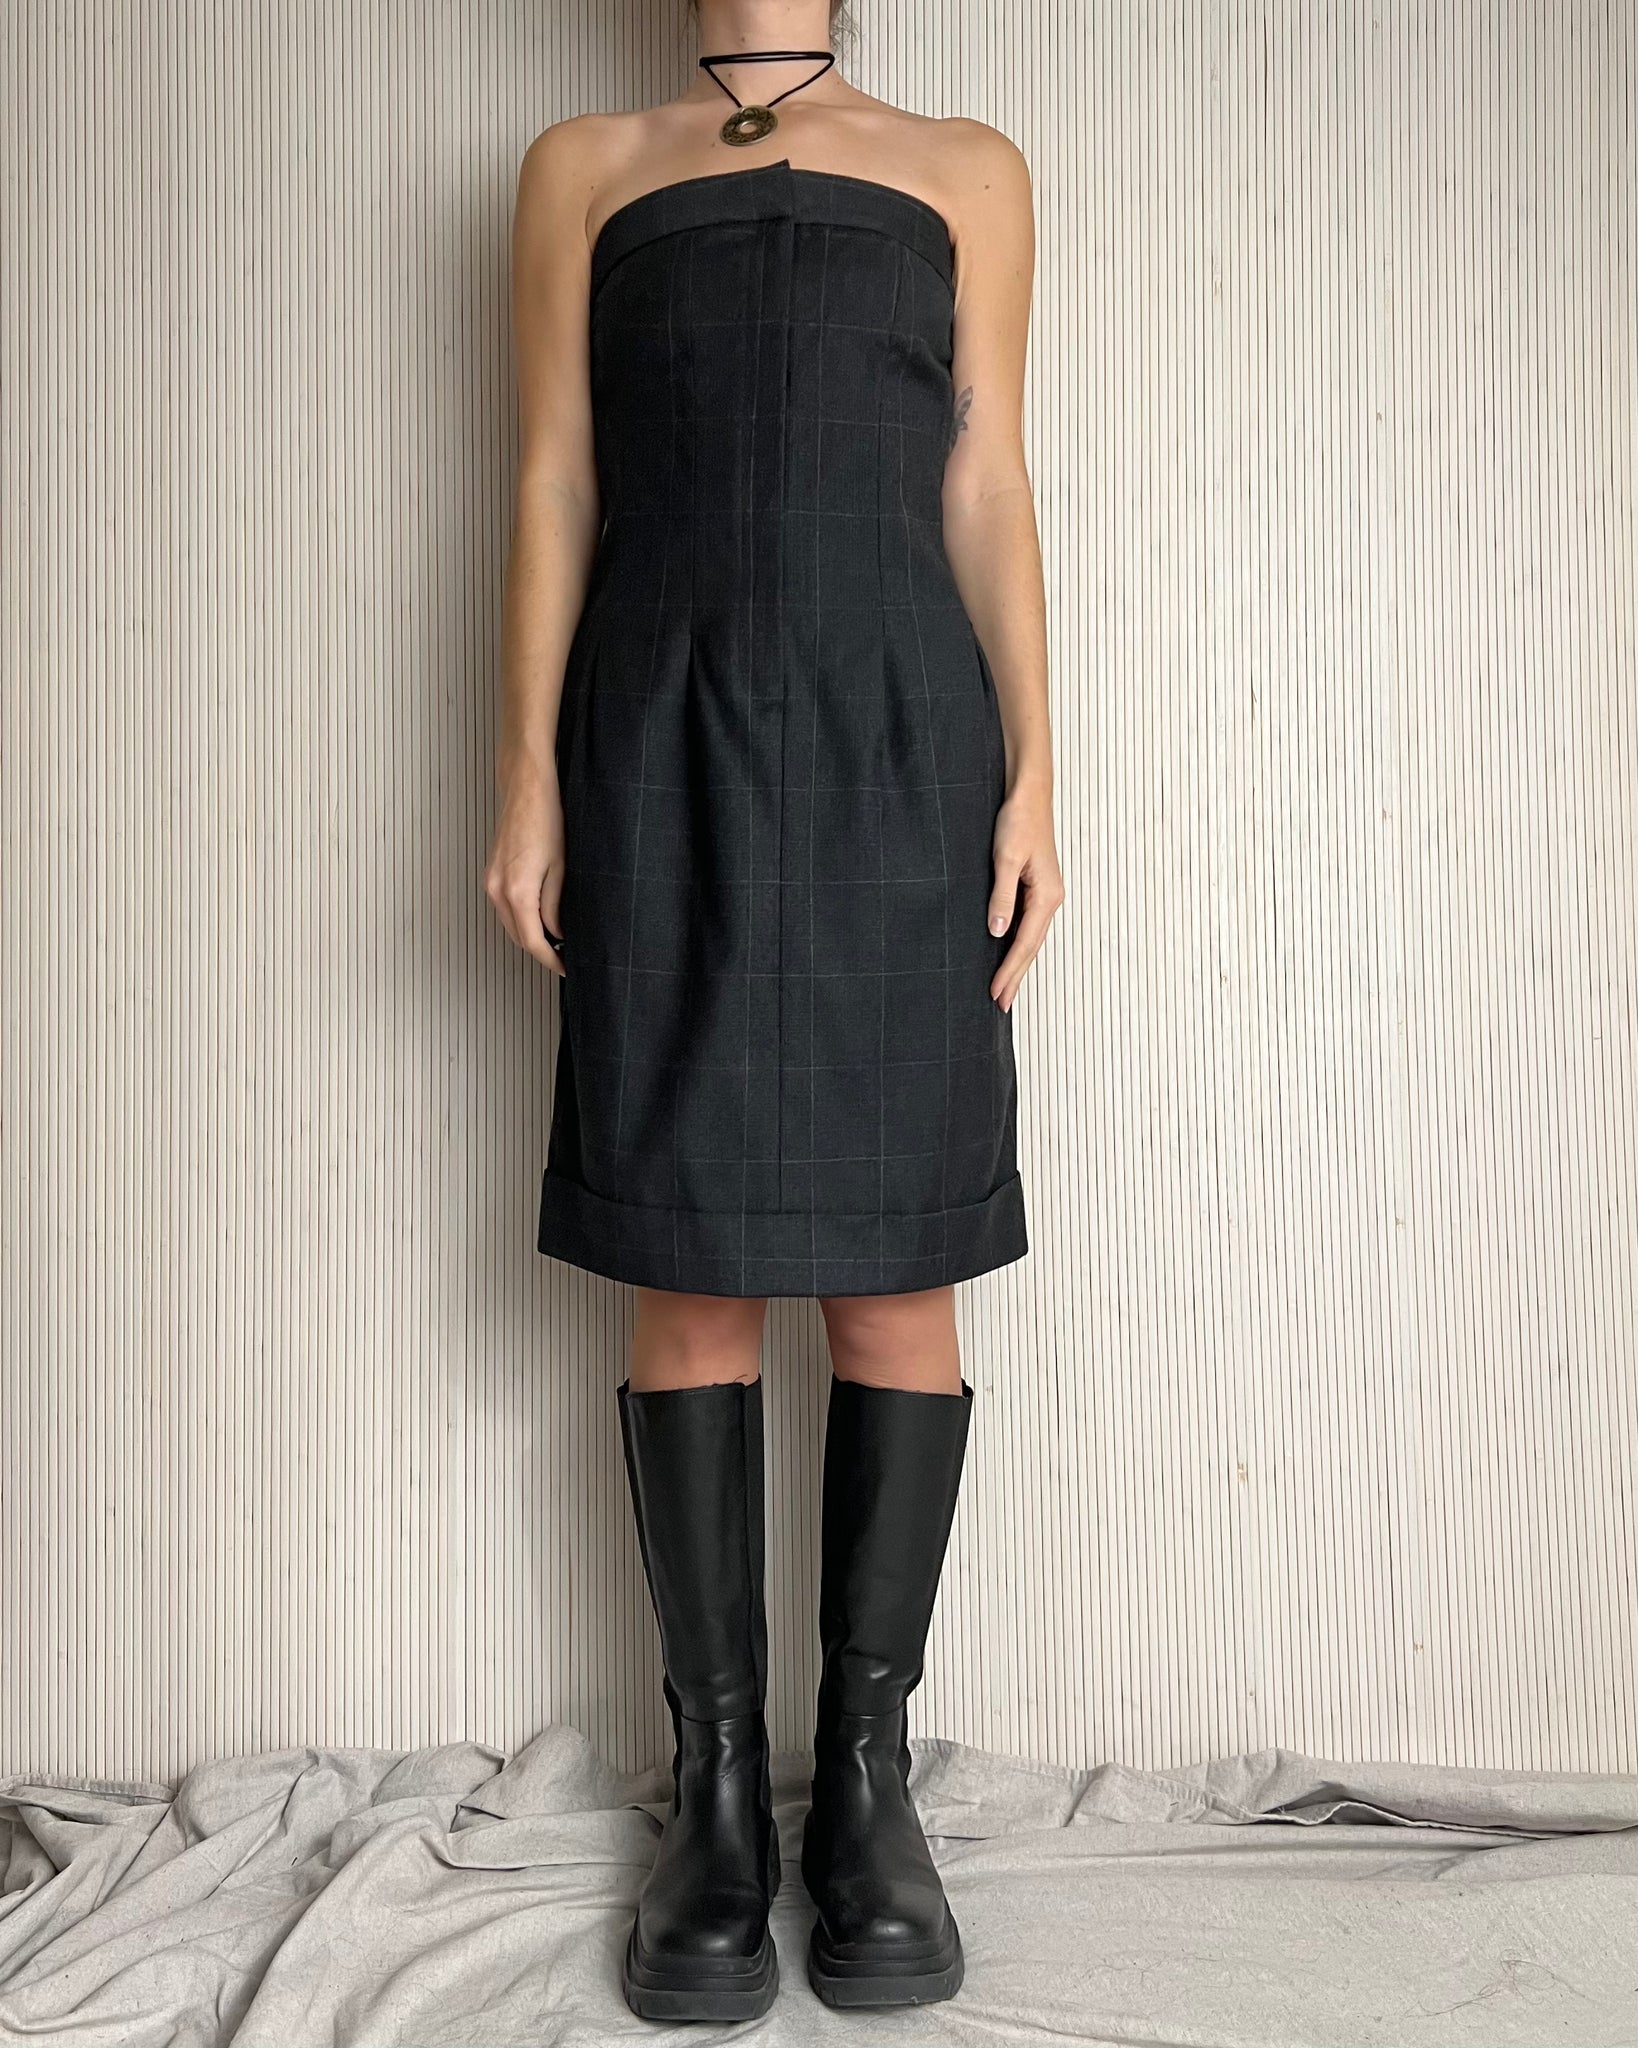 00s Plaid Strapless Dress (Size 6)